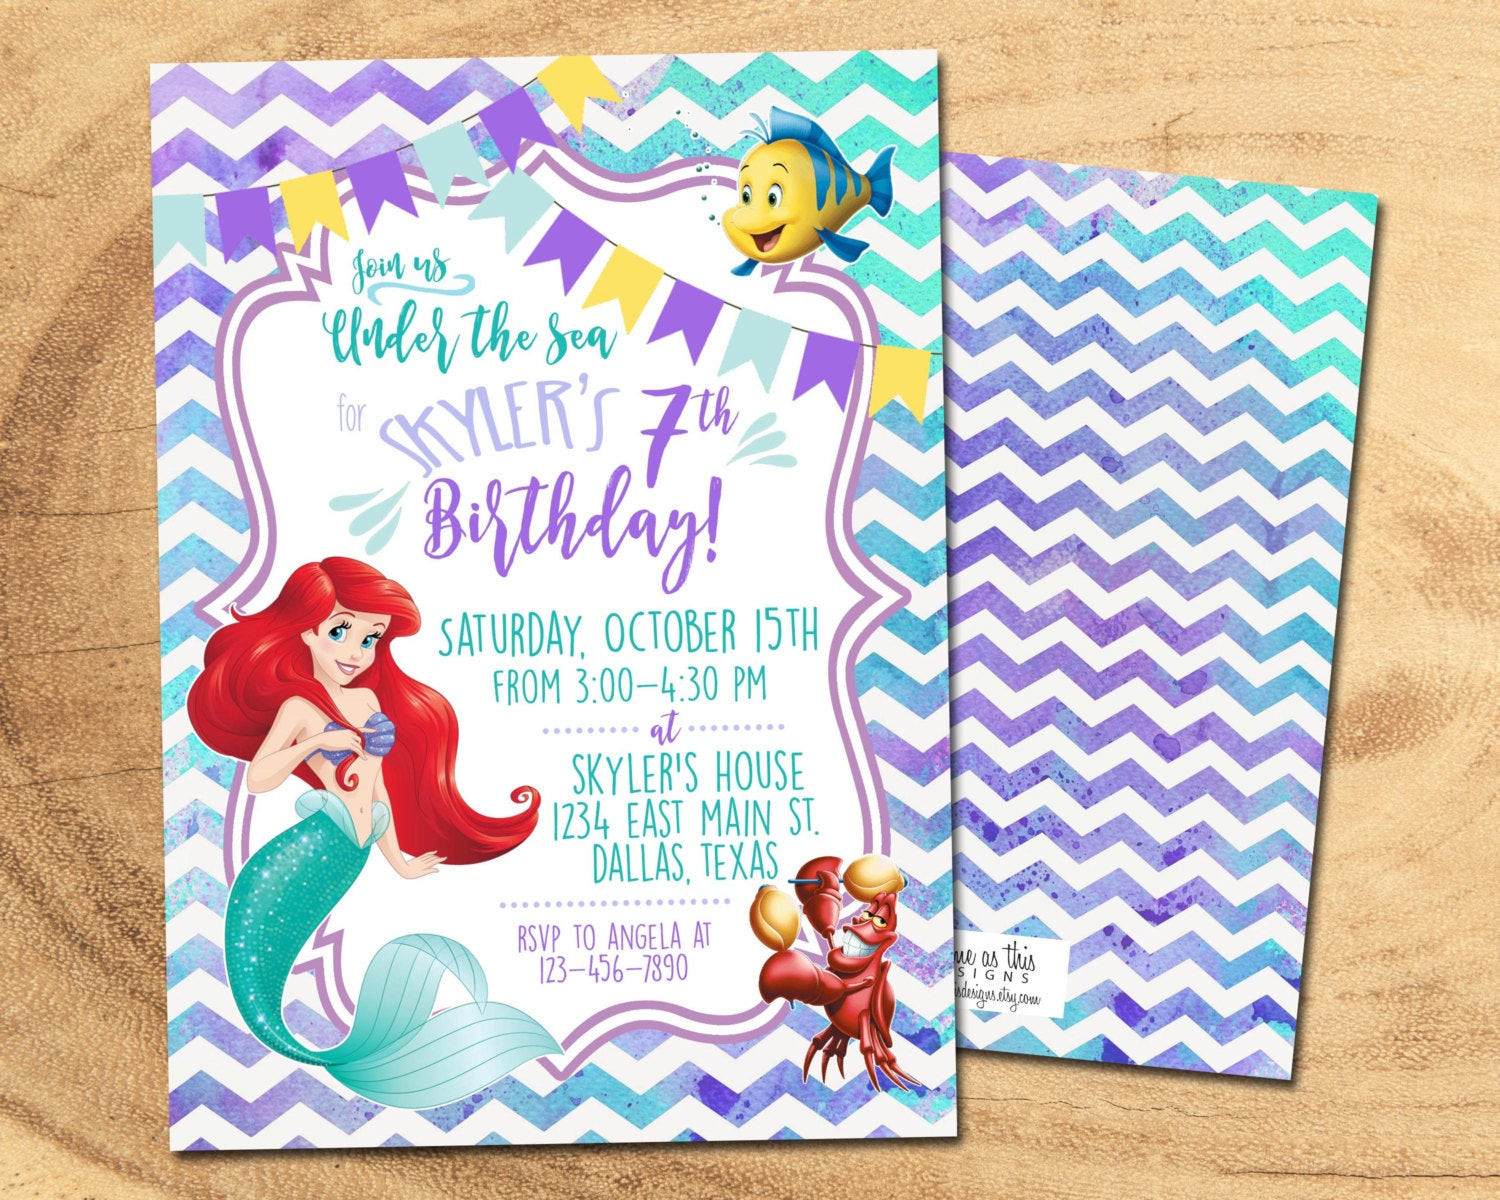 The Little Mermaid Birthday Invitations
 THE LITTLE MERMAID Birthday Invitations Ariel Birthday Party